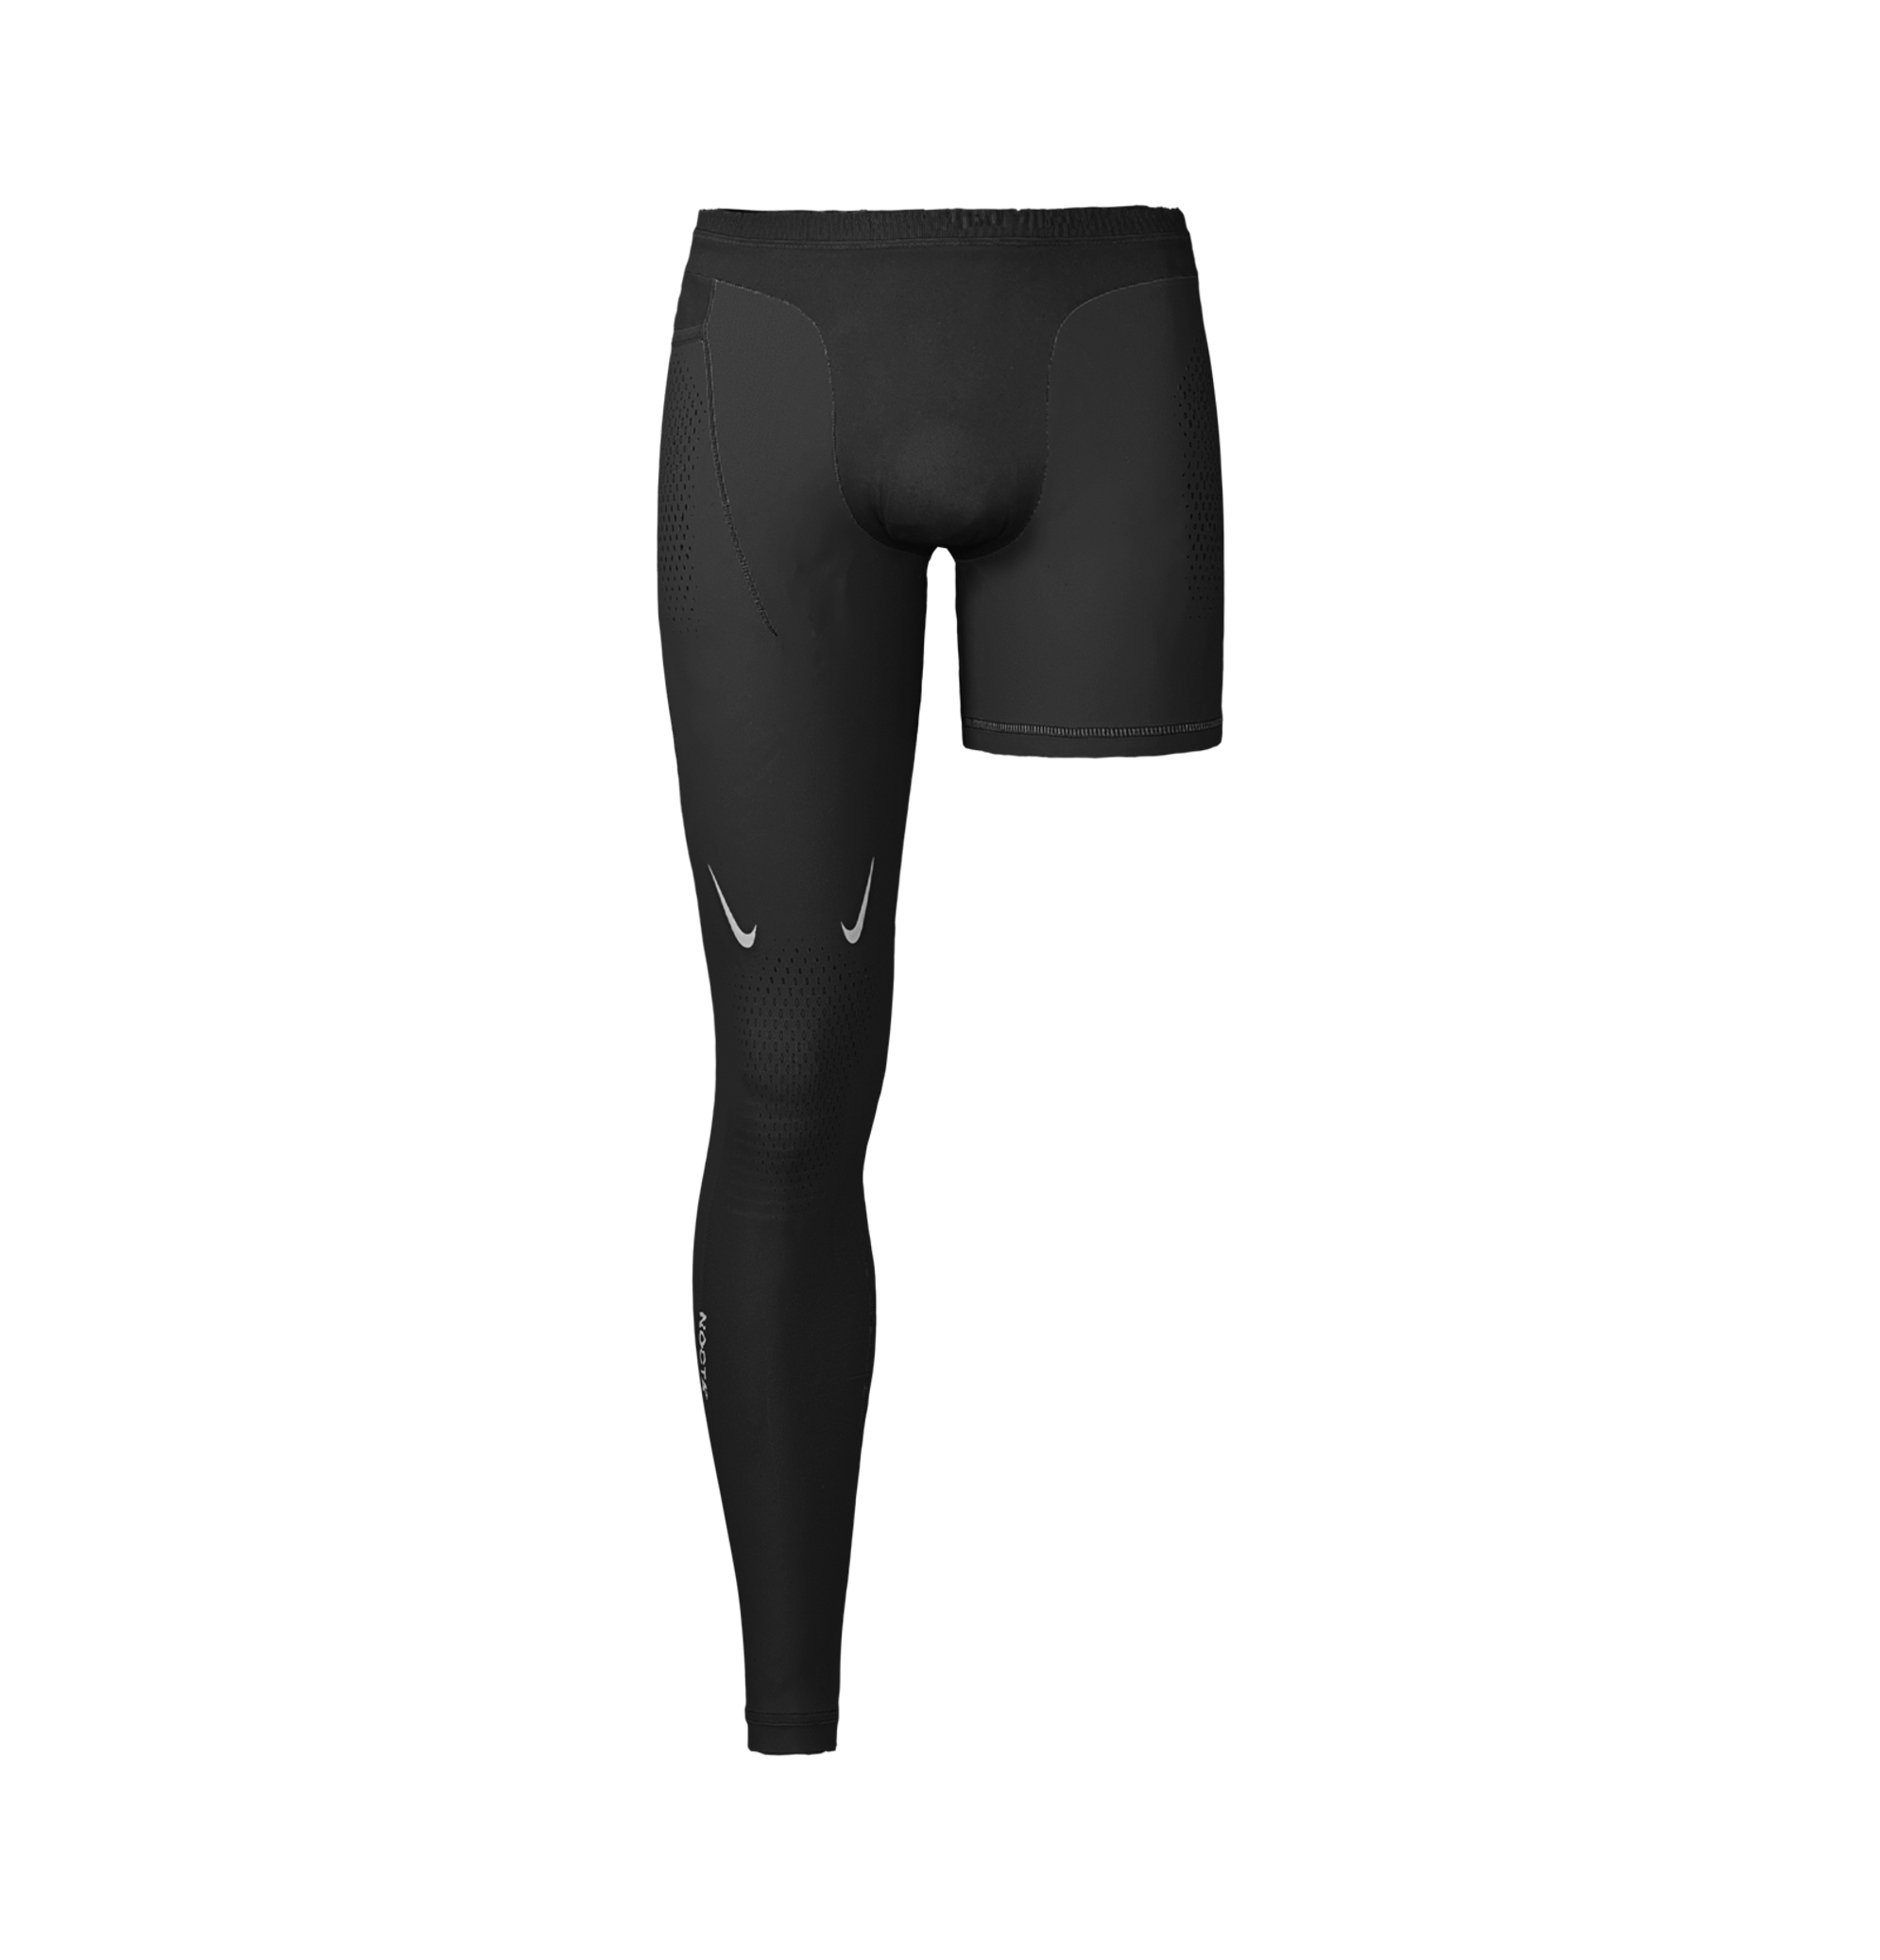 SINGLE LEG TIGHTS - BLACK (RIGHT) image.